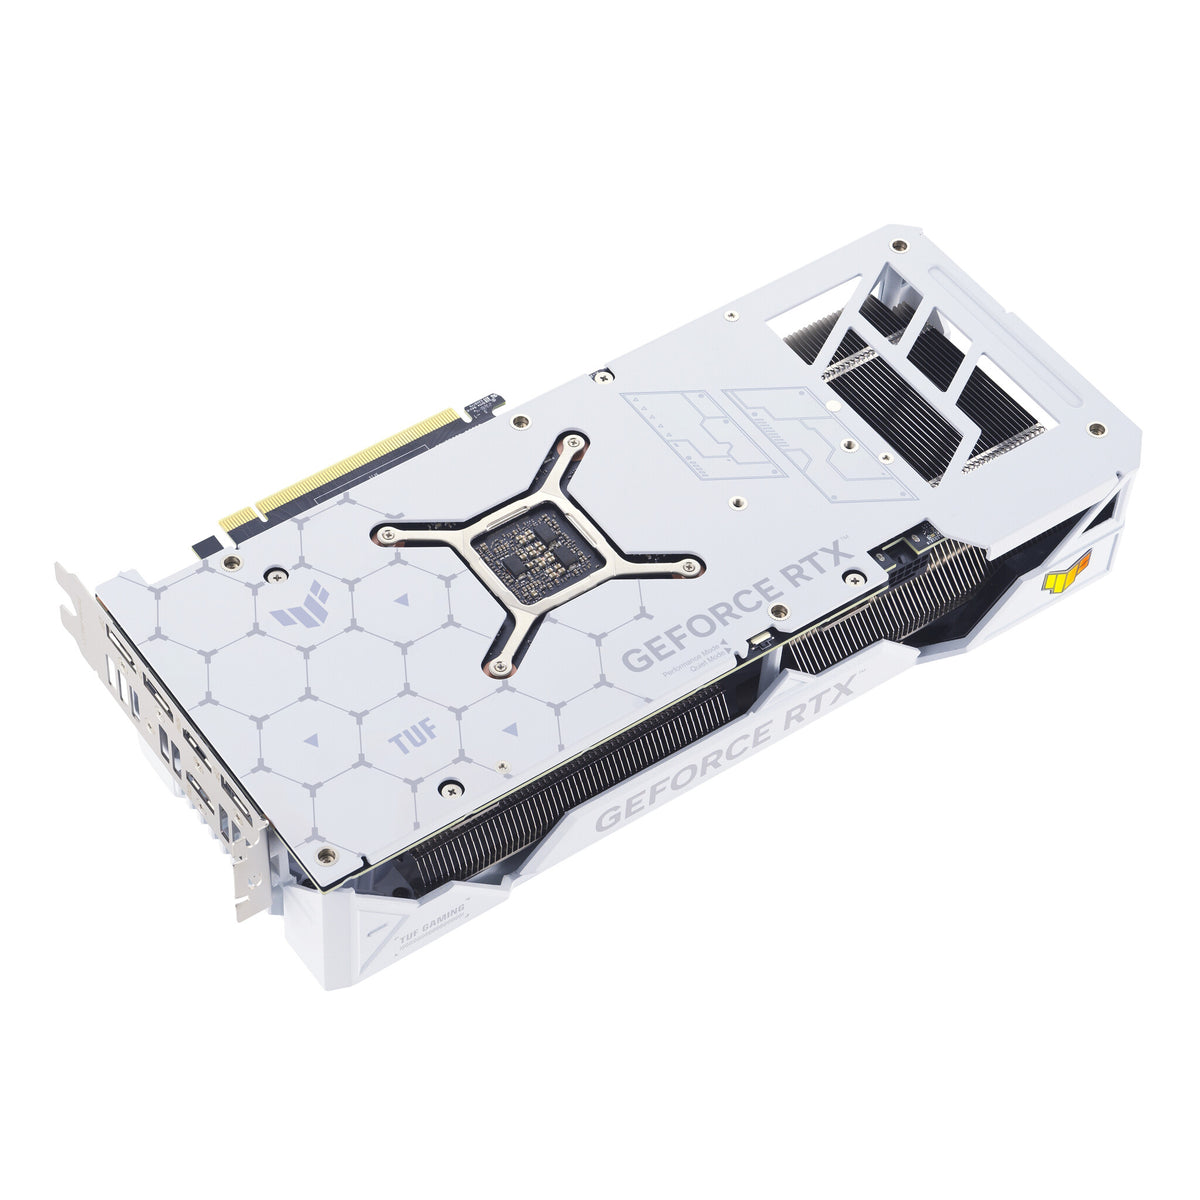 ASUS TUF Gaming White - NVIDIA 16 GB GDDR6X GeForce RTX 4070 Ti SUPER graphics card